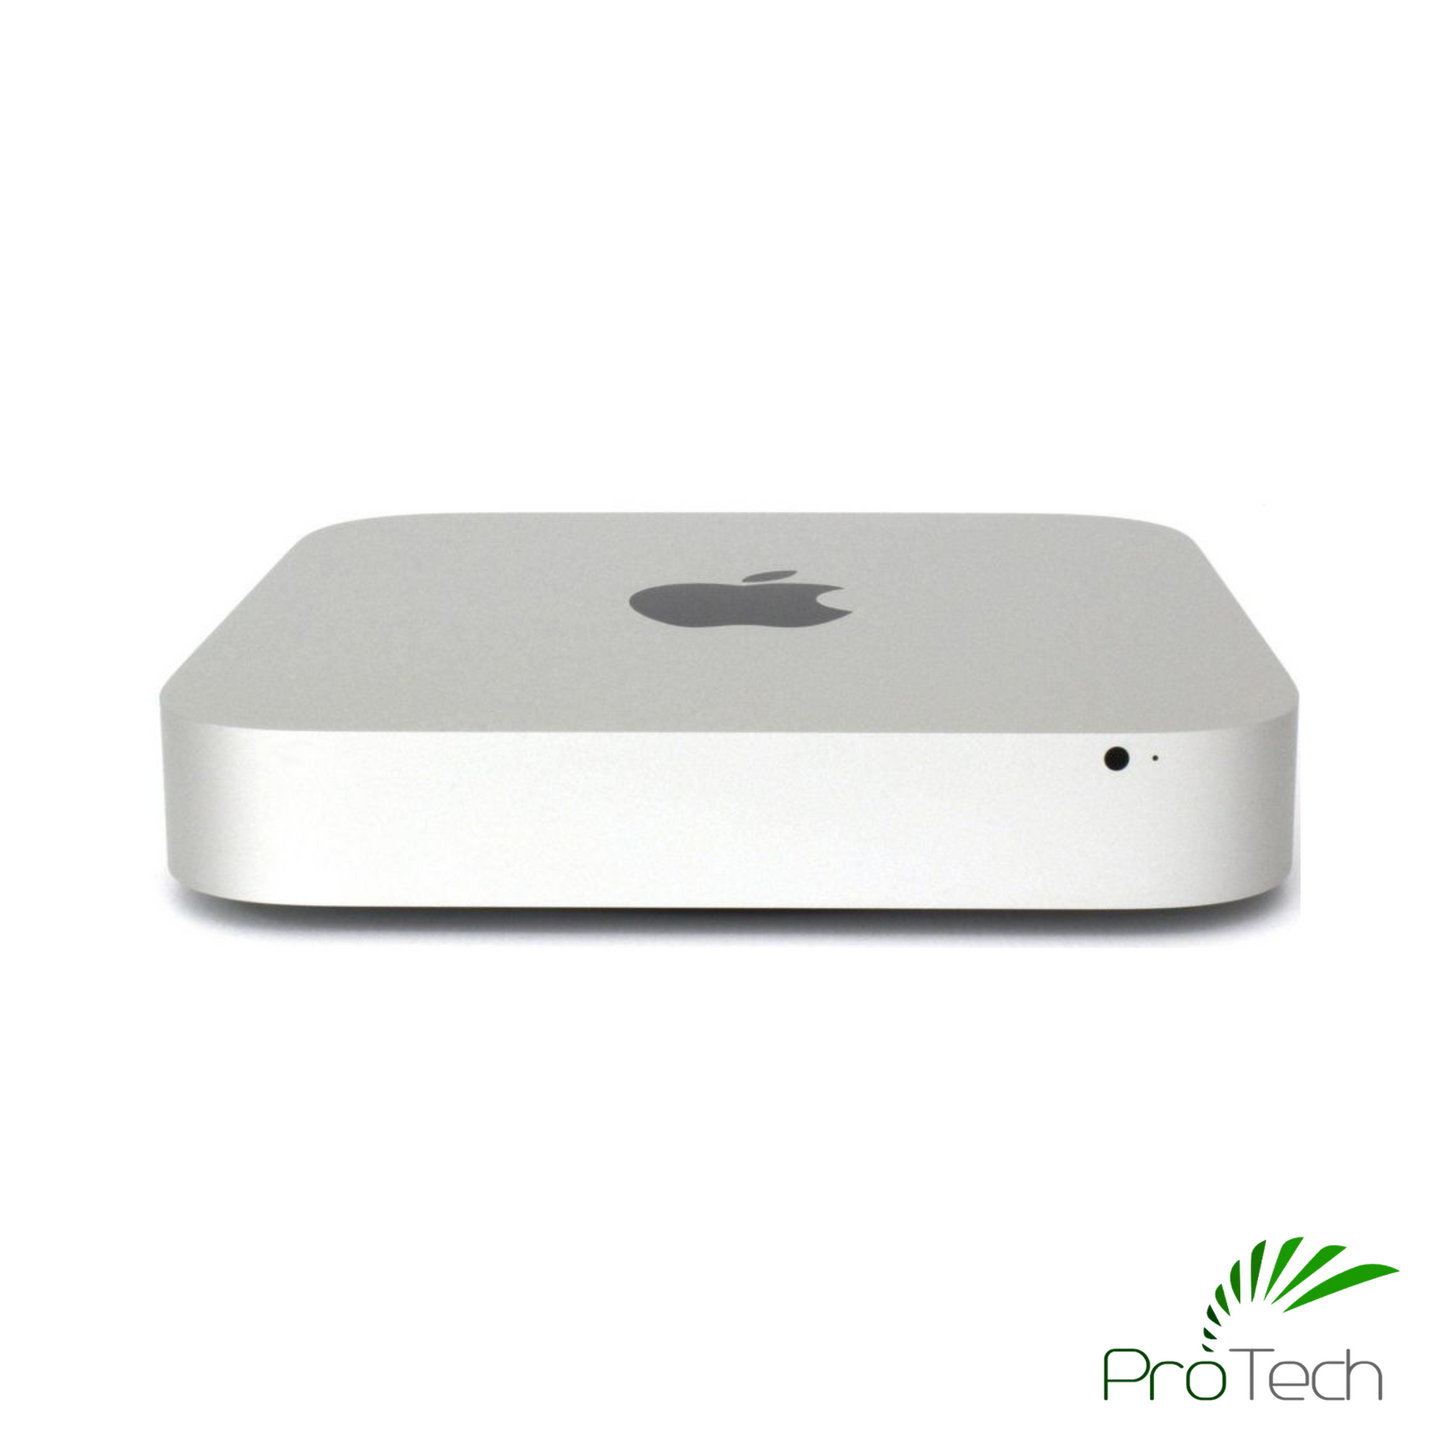 Apple Mac Mini (Late 2014) | Core i5 | 8GB RAM | 1TB HDD